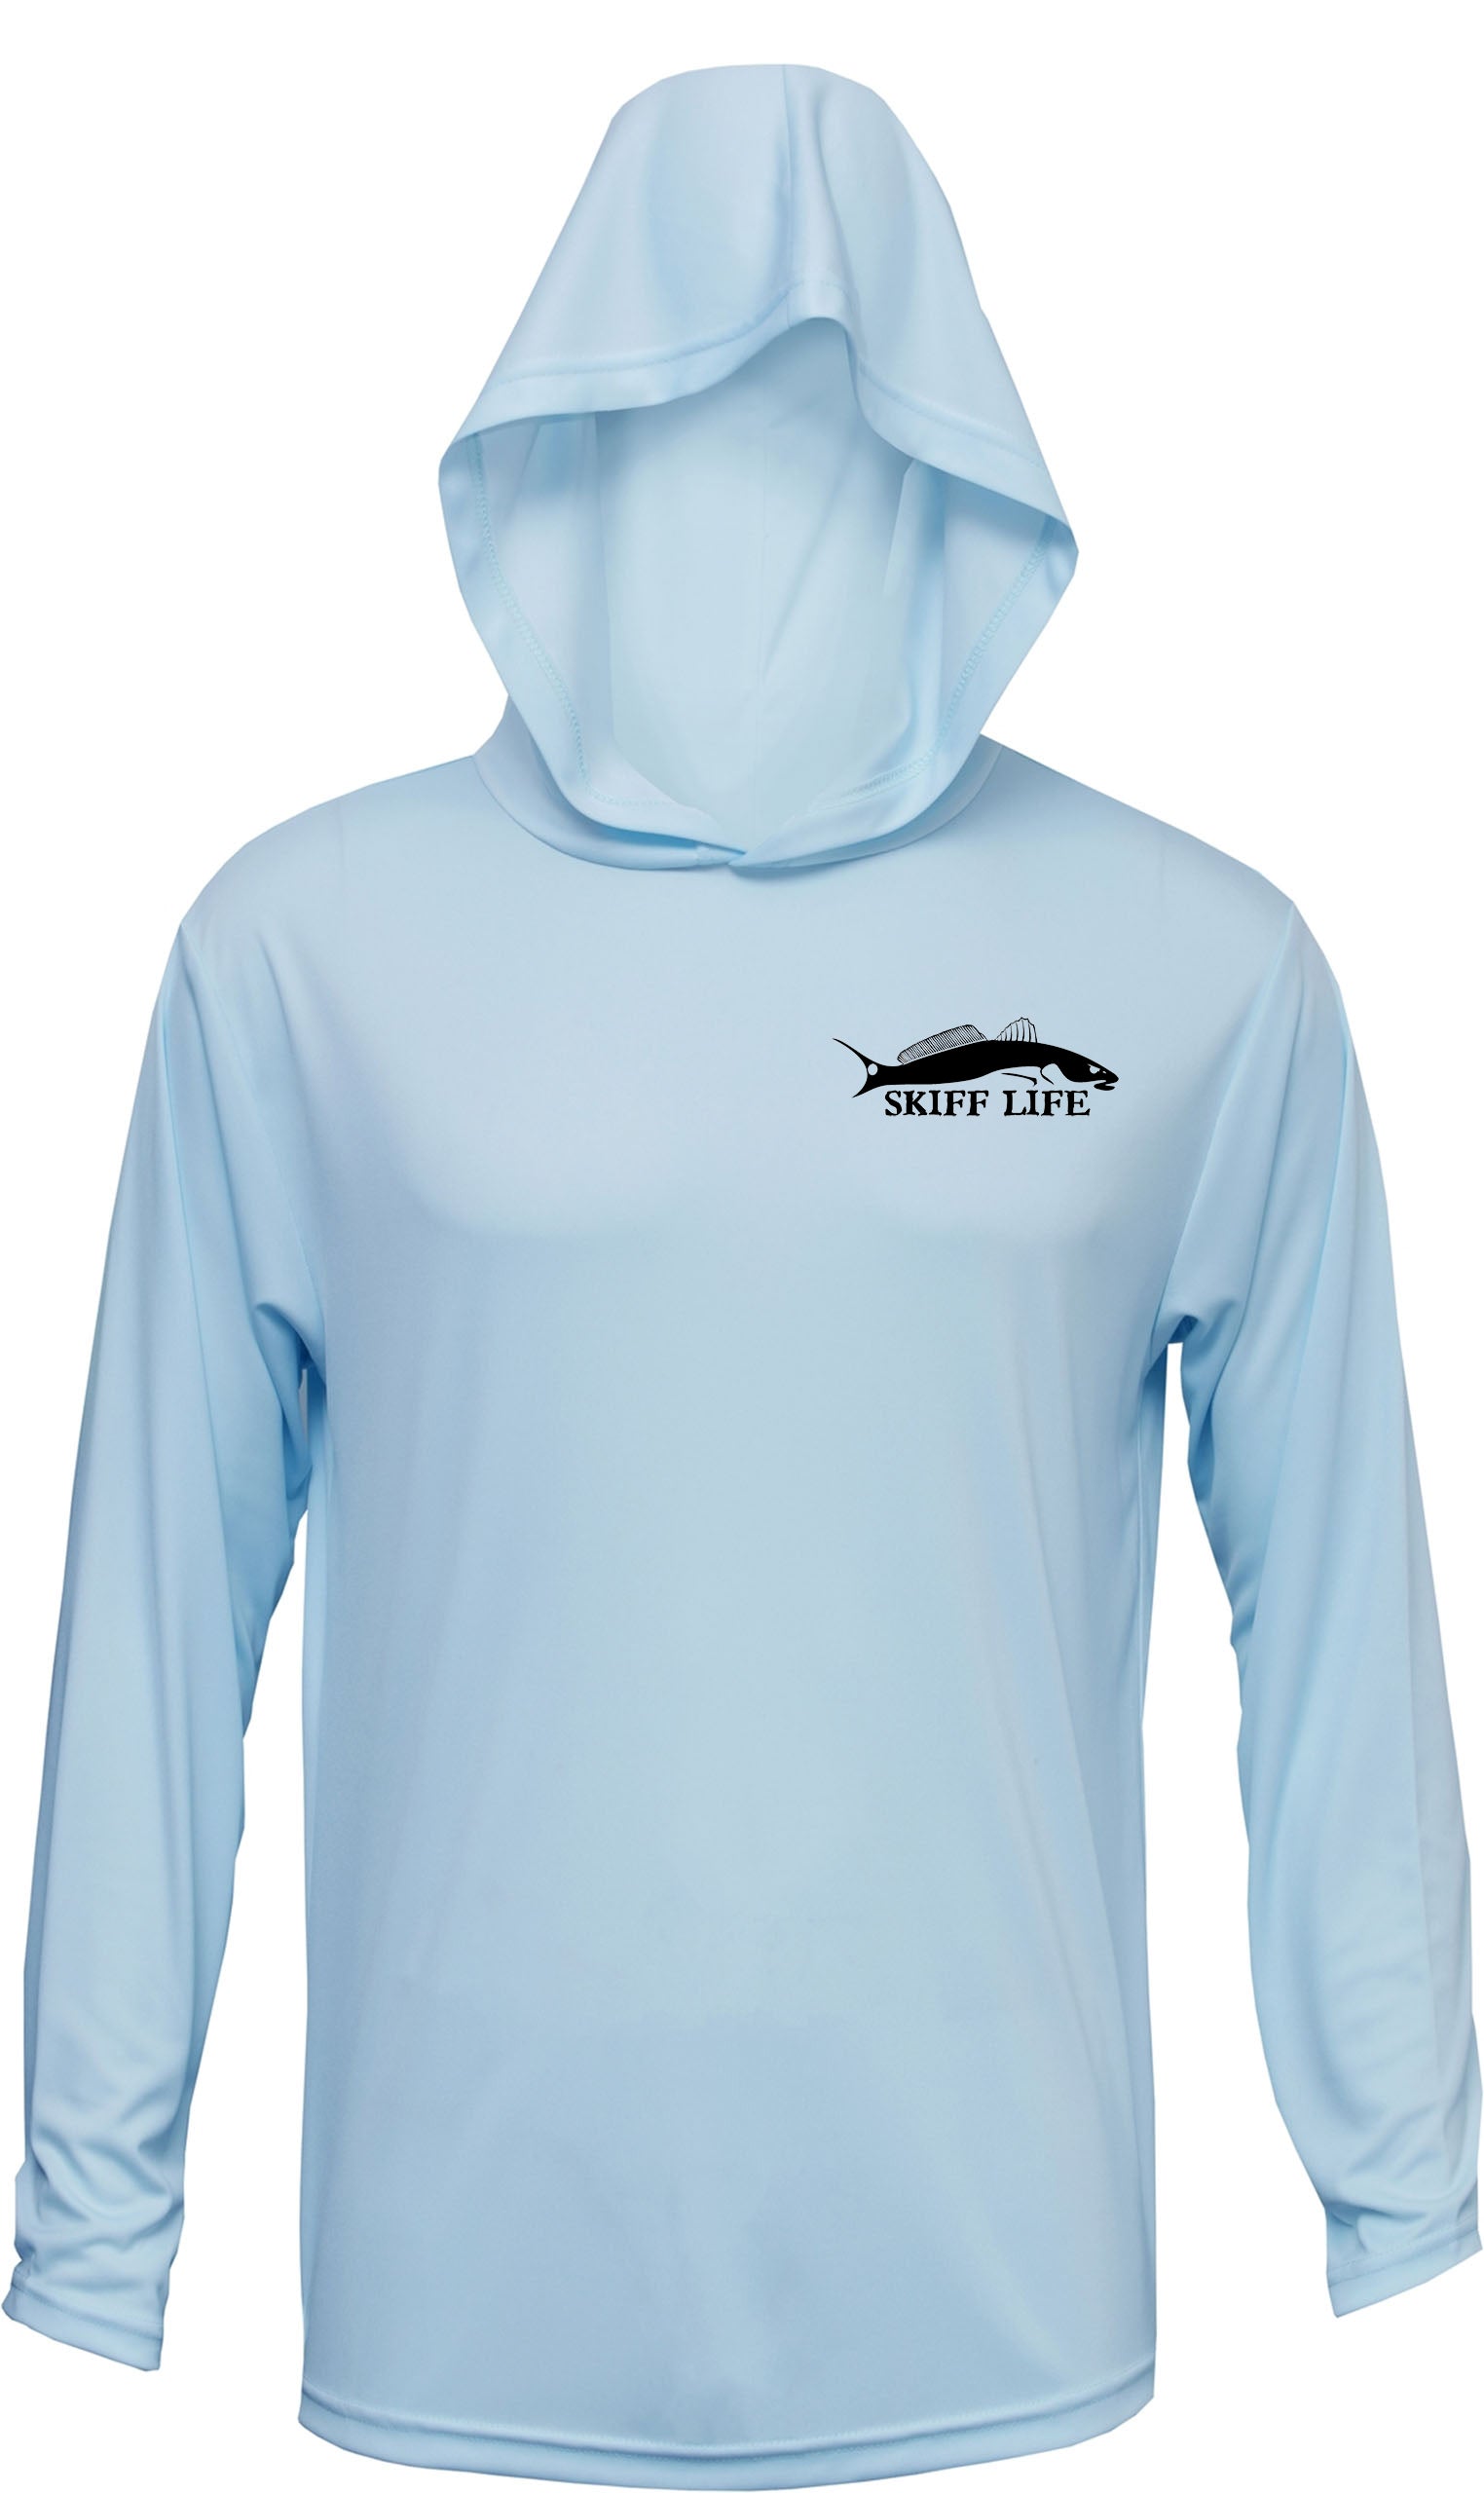 Mahi Dorado Dolfin Fishing Hoodie Shirts Men's Quick Dry Lightweight UPF 50+ Long Sleeve Hoodie Shirts Rash Guard Swim Shirts Hiking Shirts Moisture Wicking by Skiff Life - Skiff Life